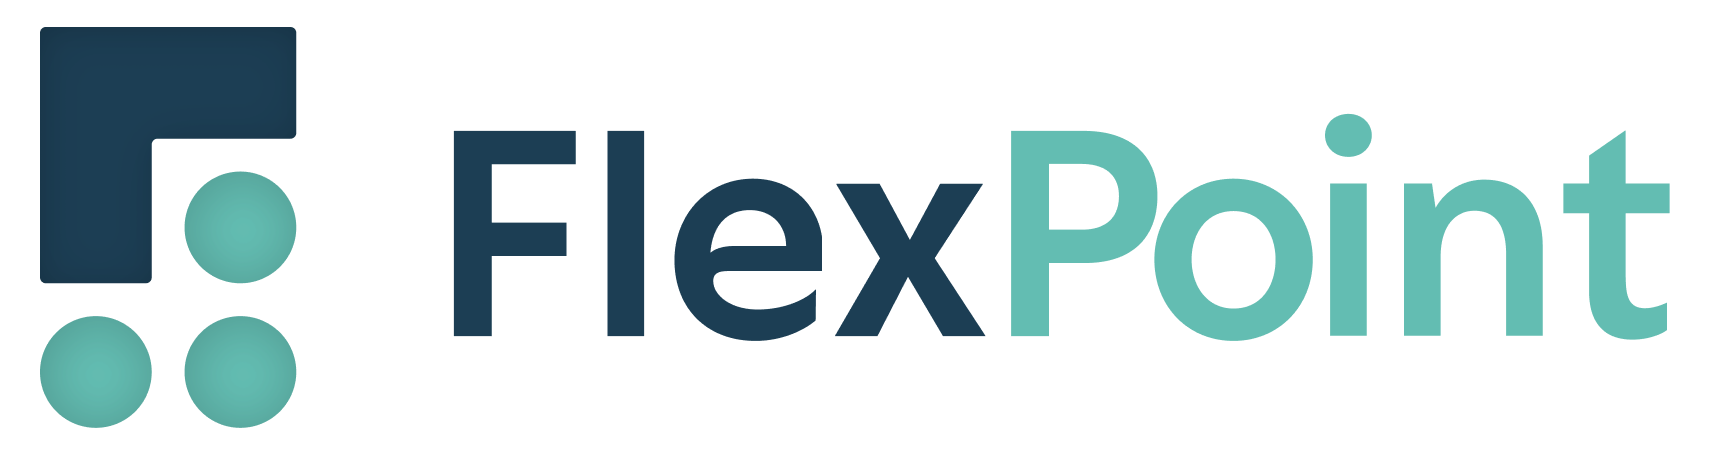 FlexPoint-FullColor